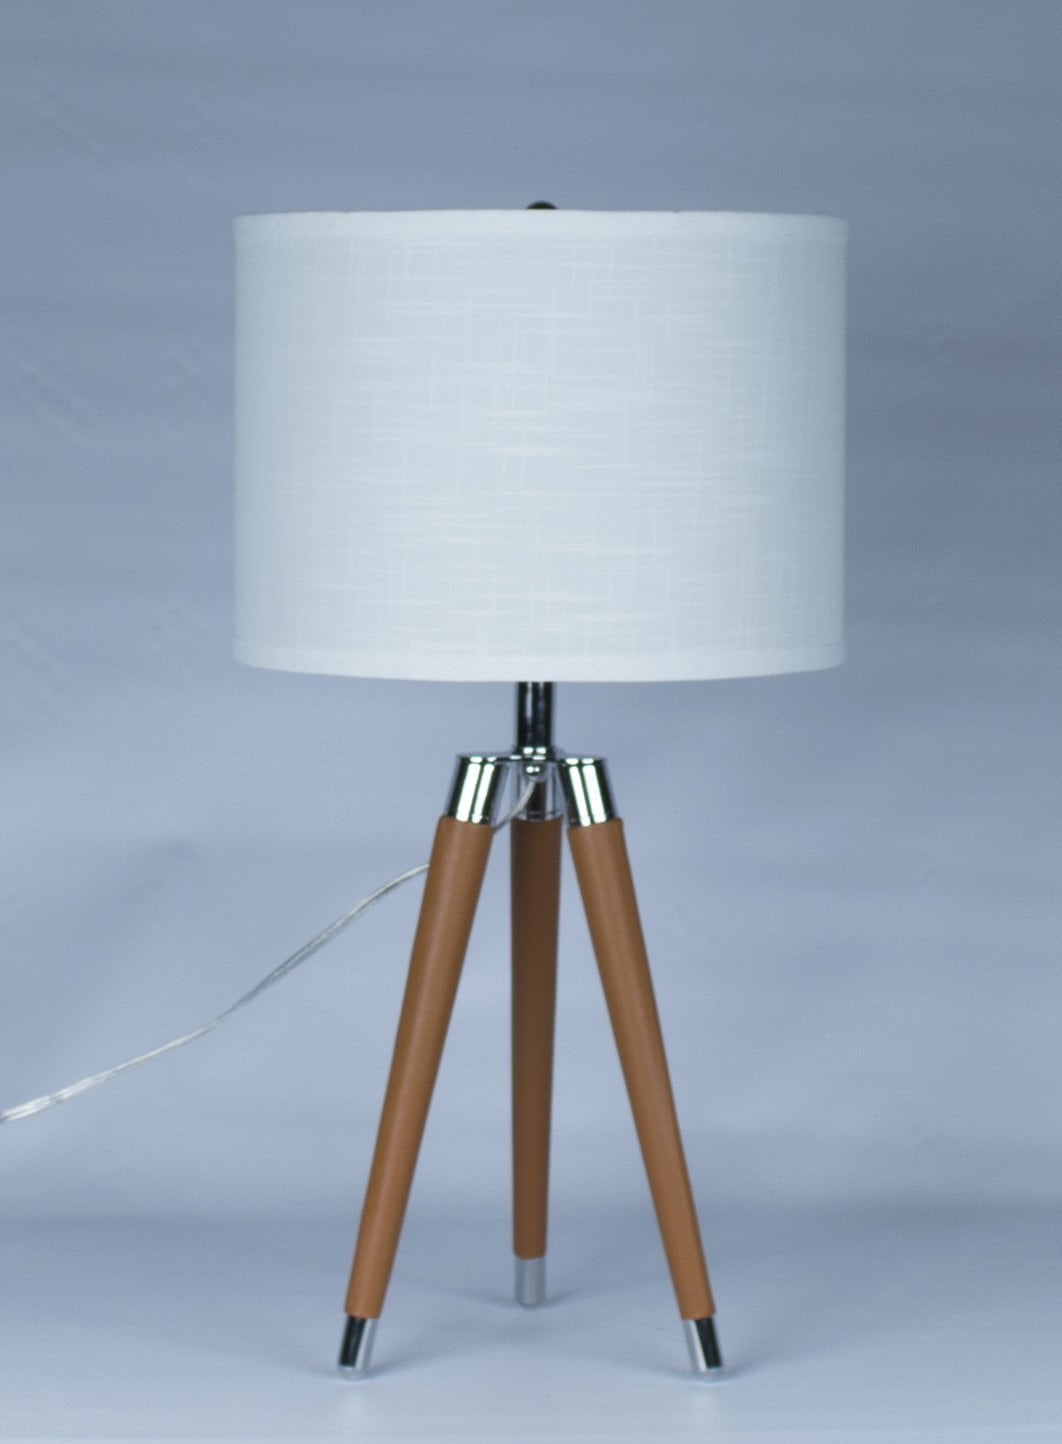 Wood & Chrome Modern Tripod Table Lamp White Finish with Shades & LED Light Bulb 